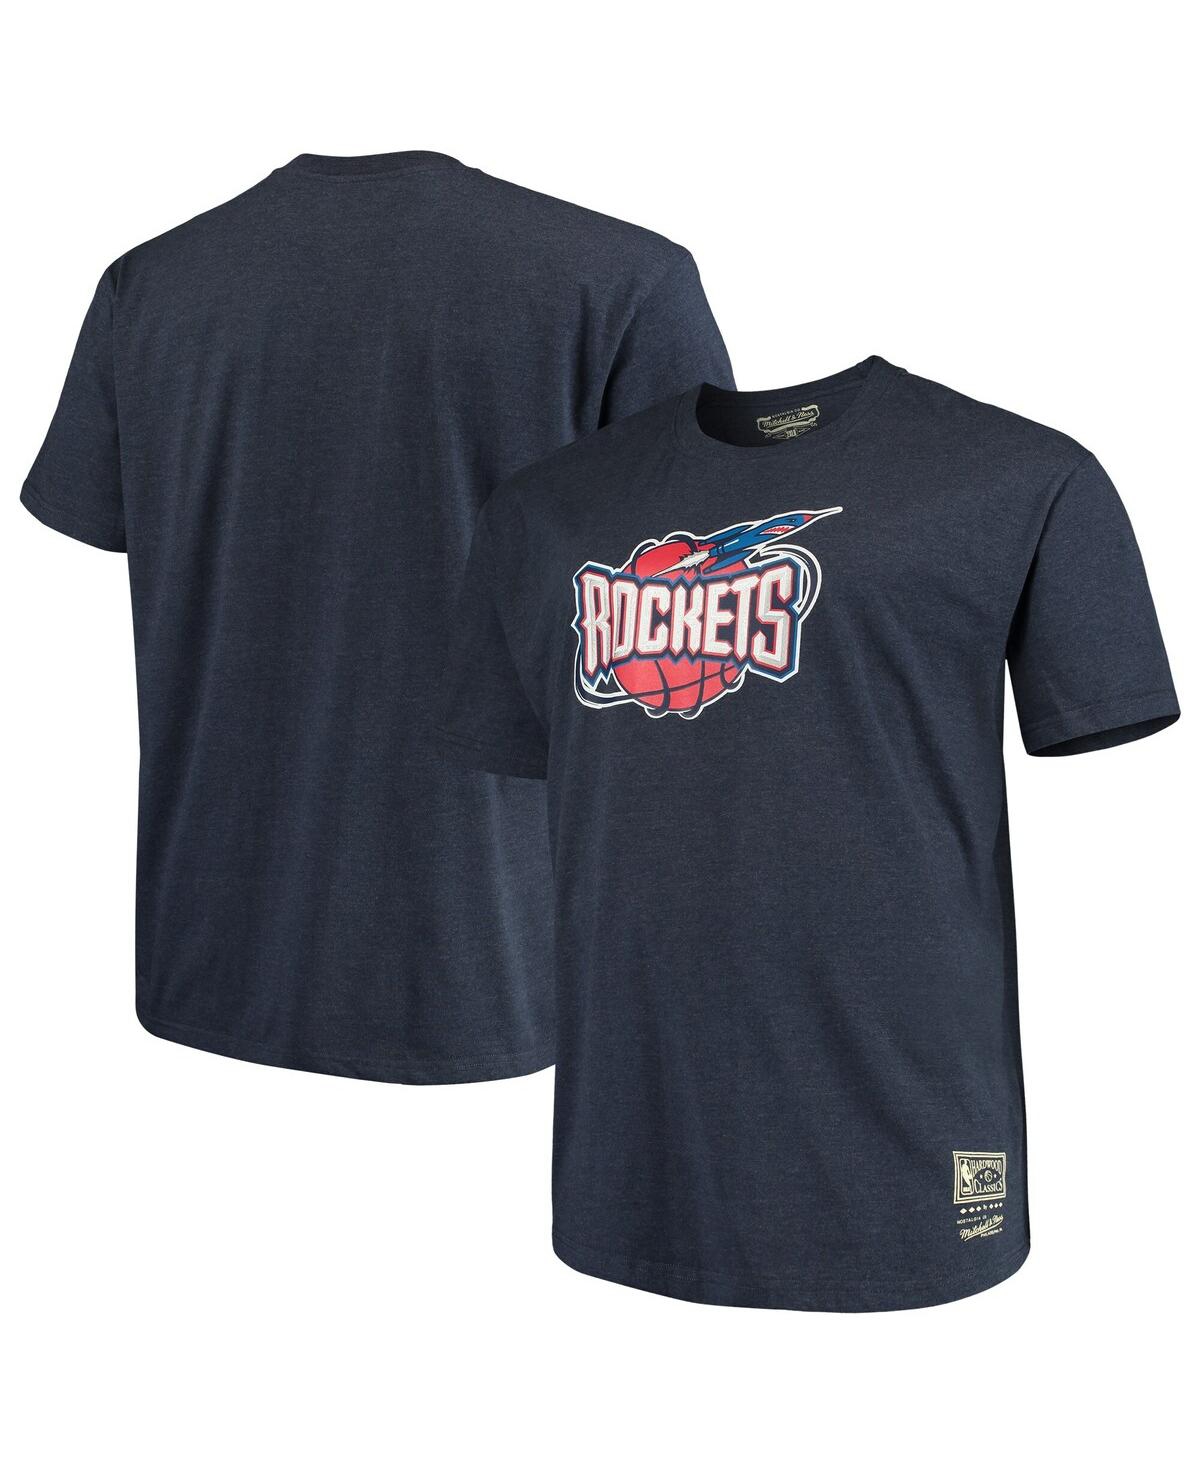 Men's Mitchell & Ness Navy Distressed Houston Rockets Big and Tall Hardwood Classics Vintage-Like Logo T-shirt - Navy